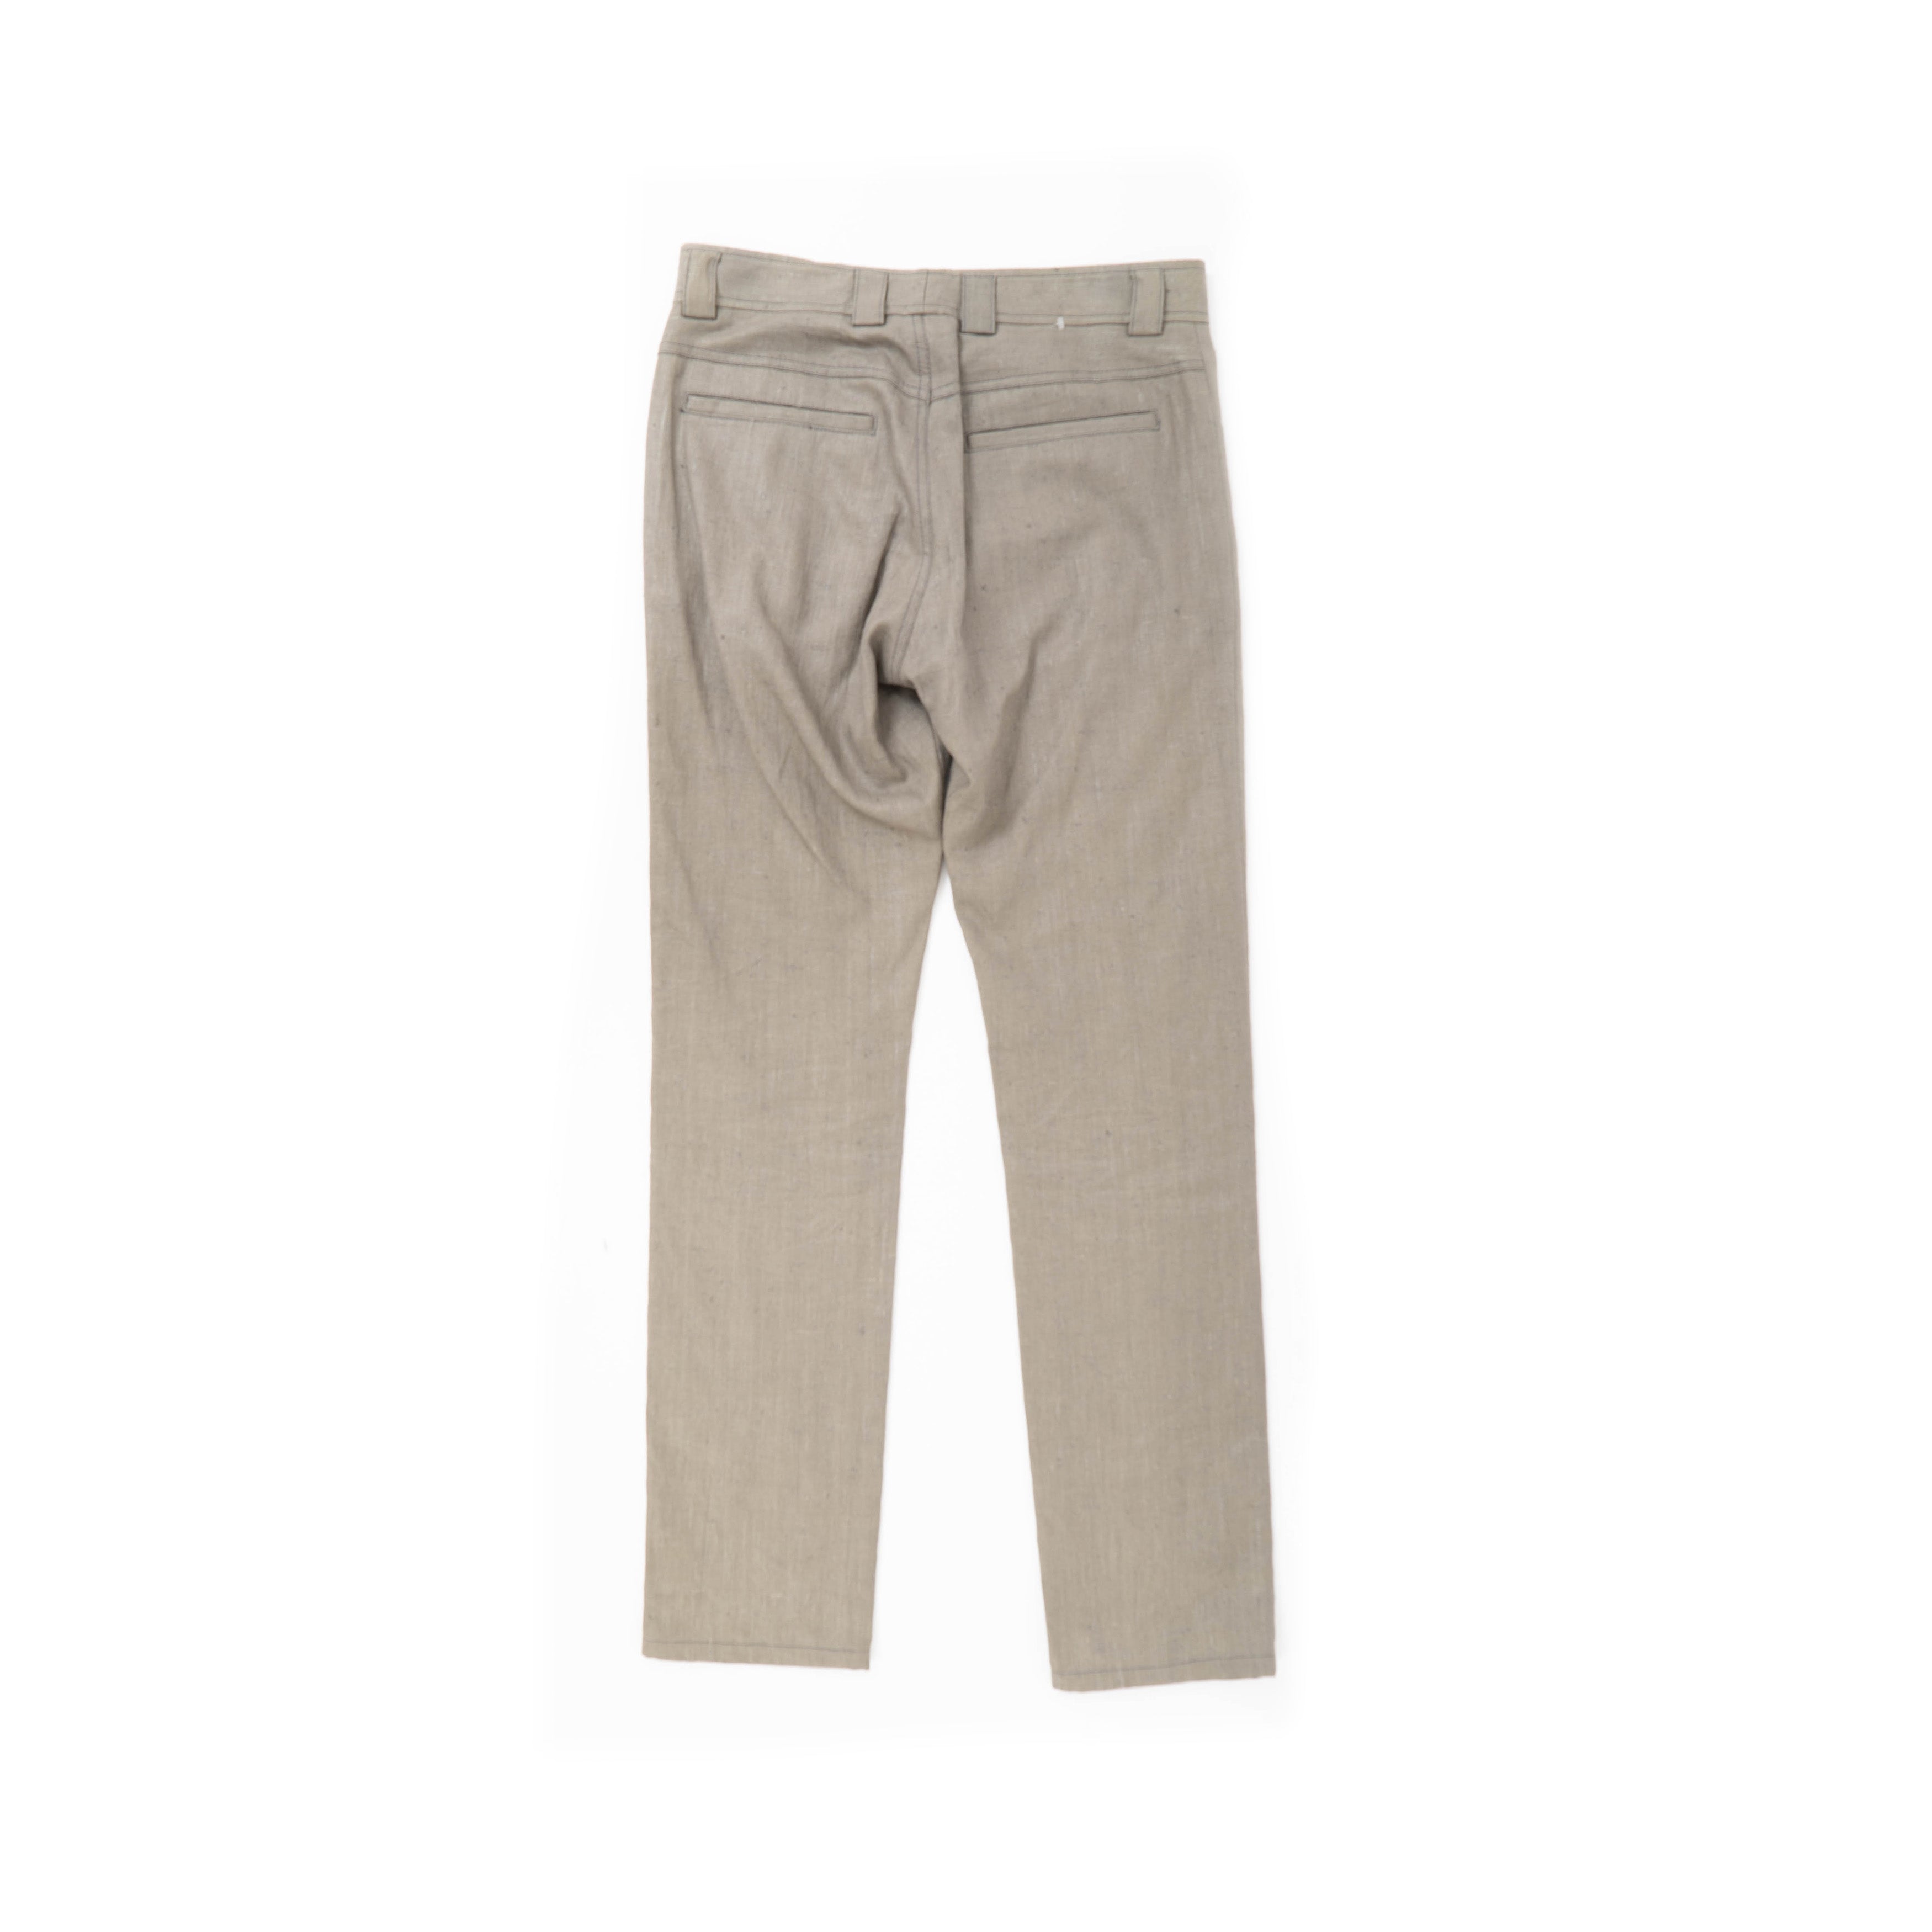 SS11 Grey Linen Trousers